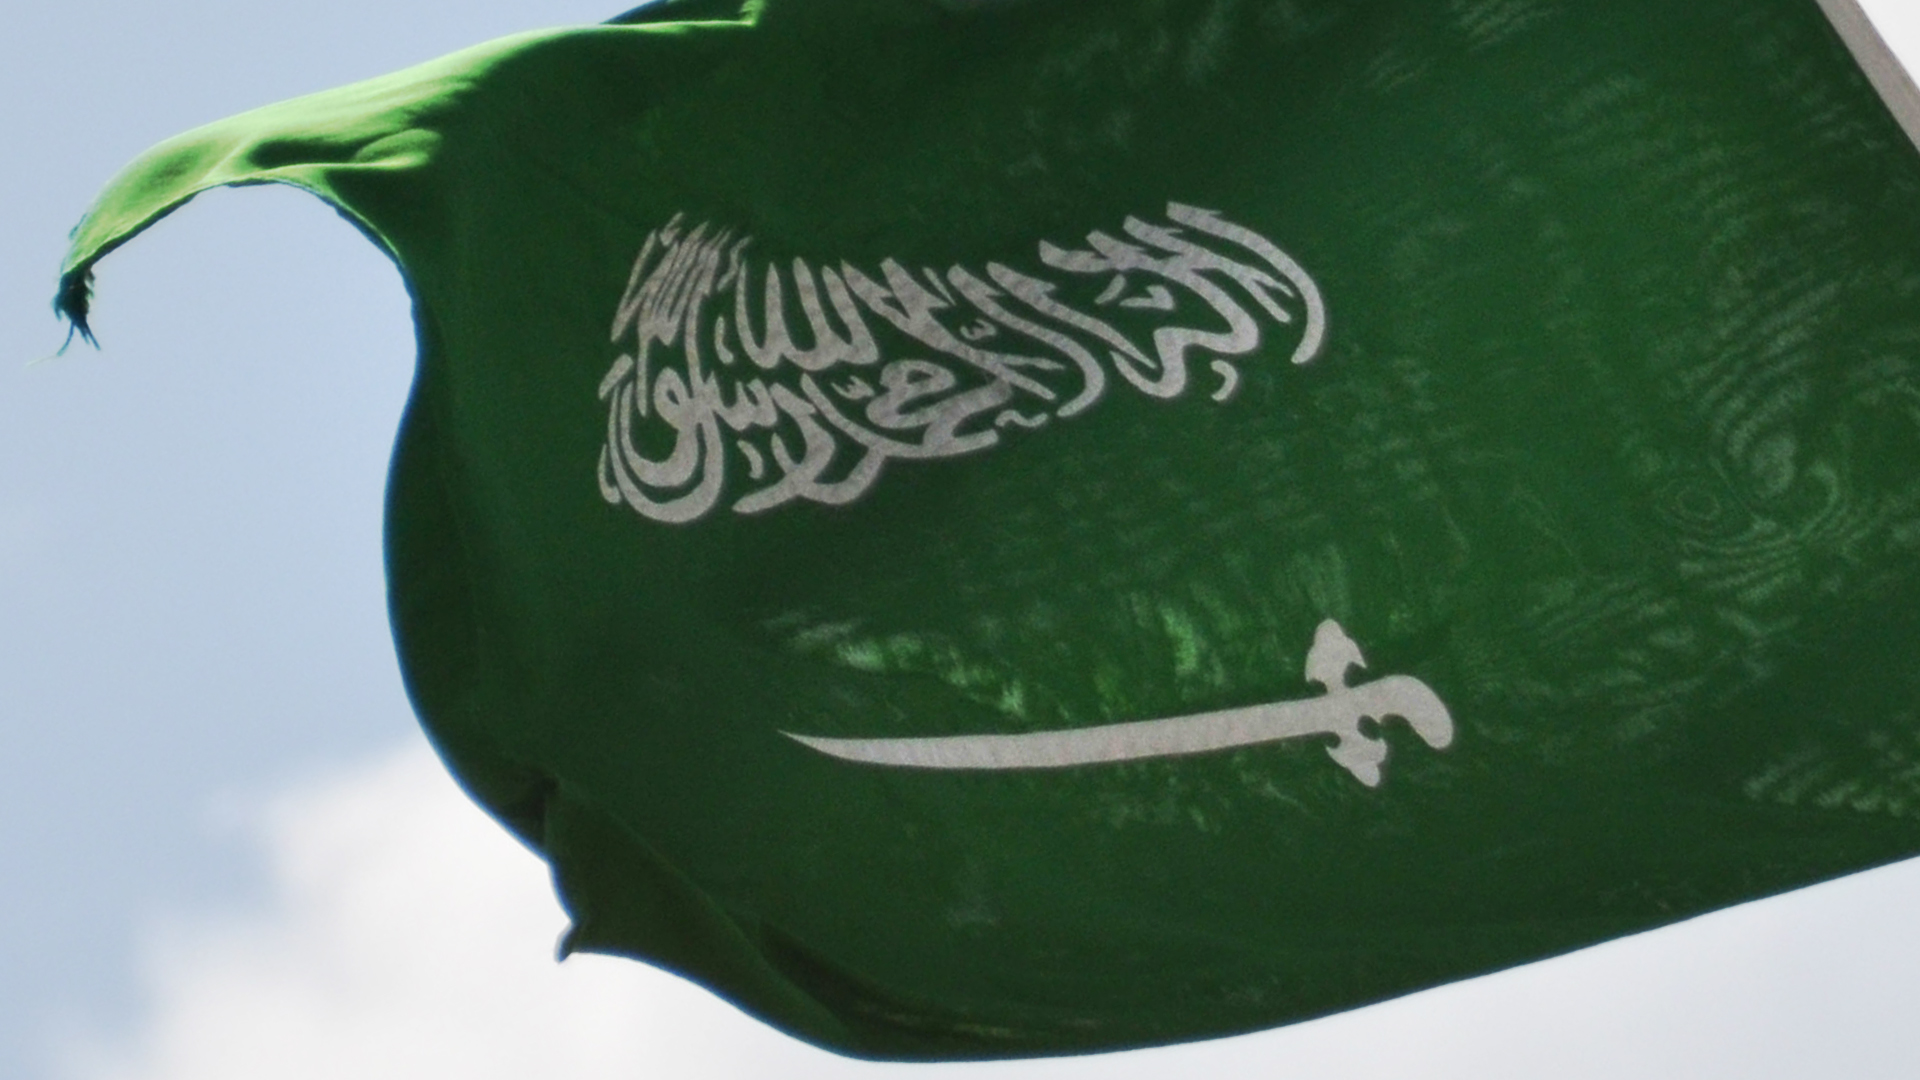 Flagge von Saudi Arabien | Bildquelle: picture alliance / PIXSELL